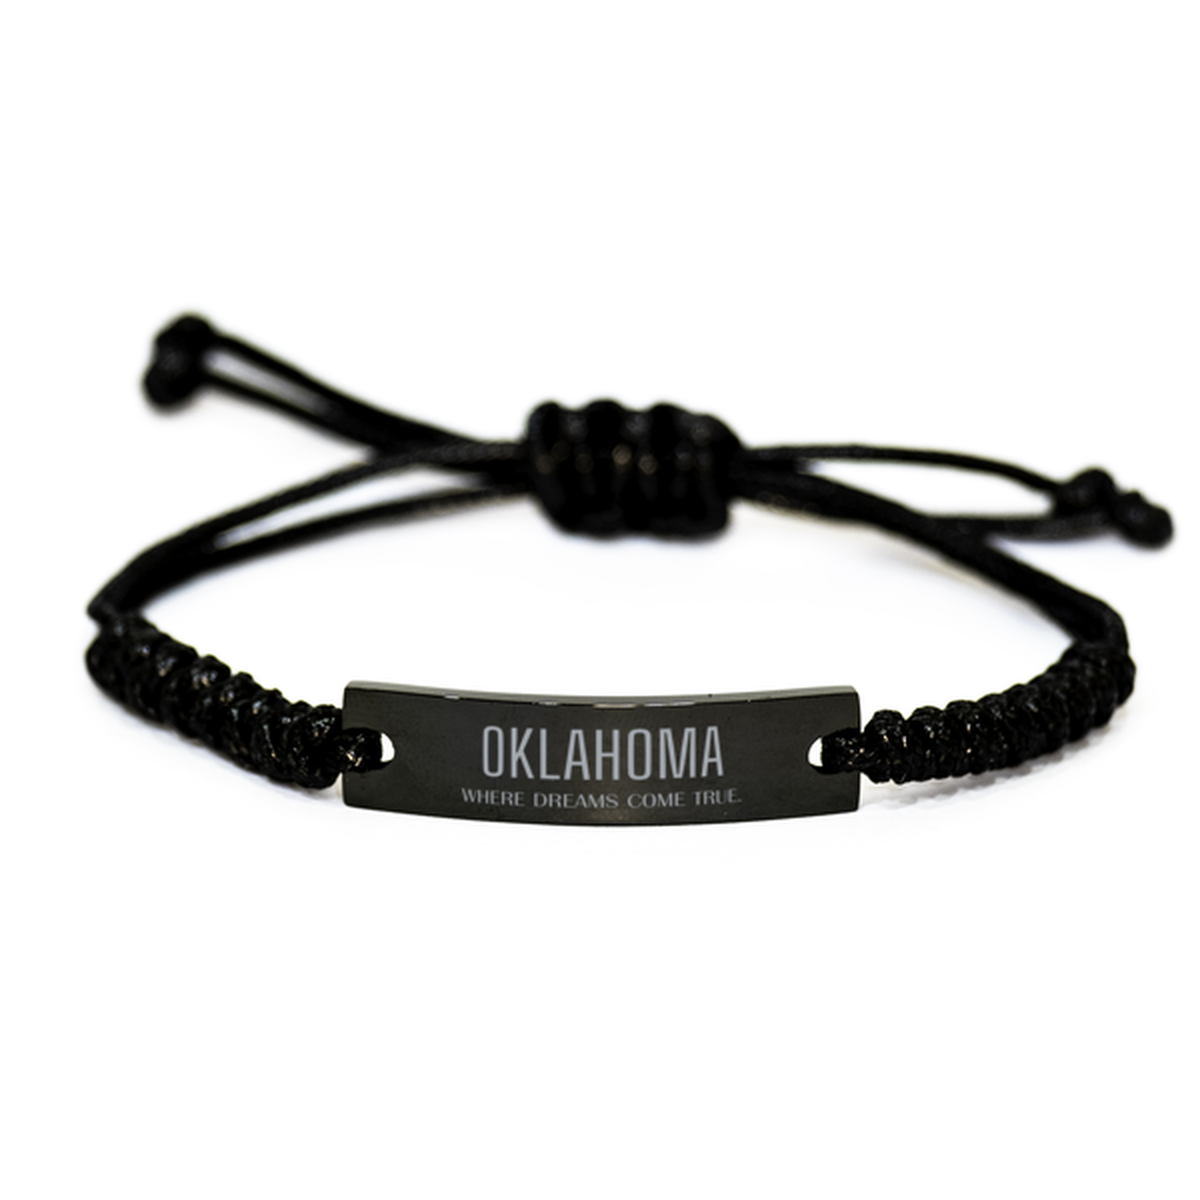 Love Oklahoma State Black Rope Bracelet, Oklahoma Where dreams come true, Birthday Inspirational Gifts For Oklahoma Men, Women, Friends